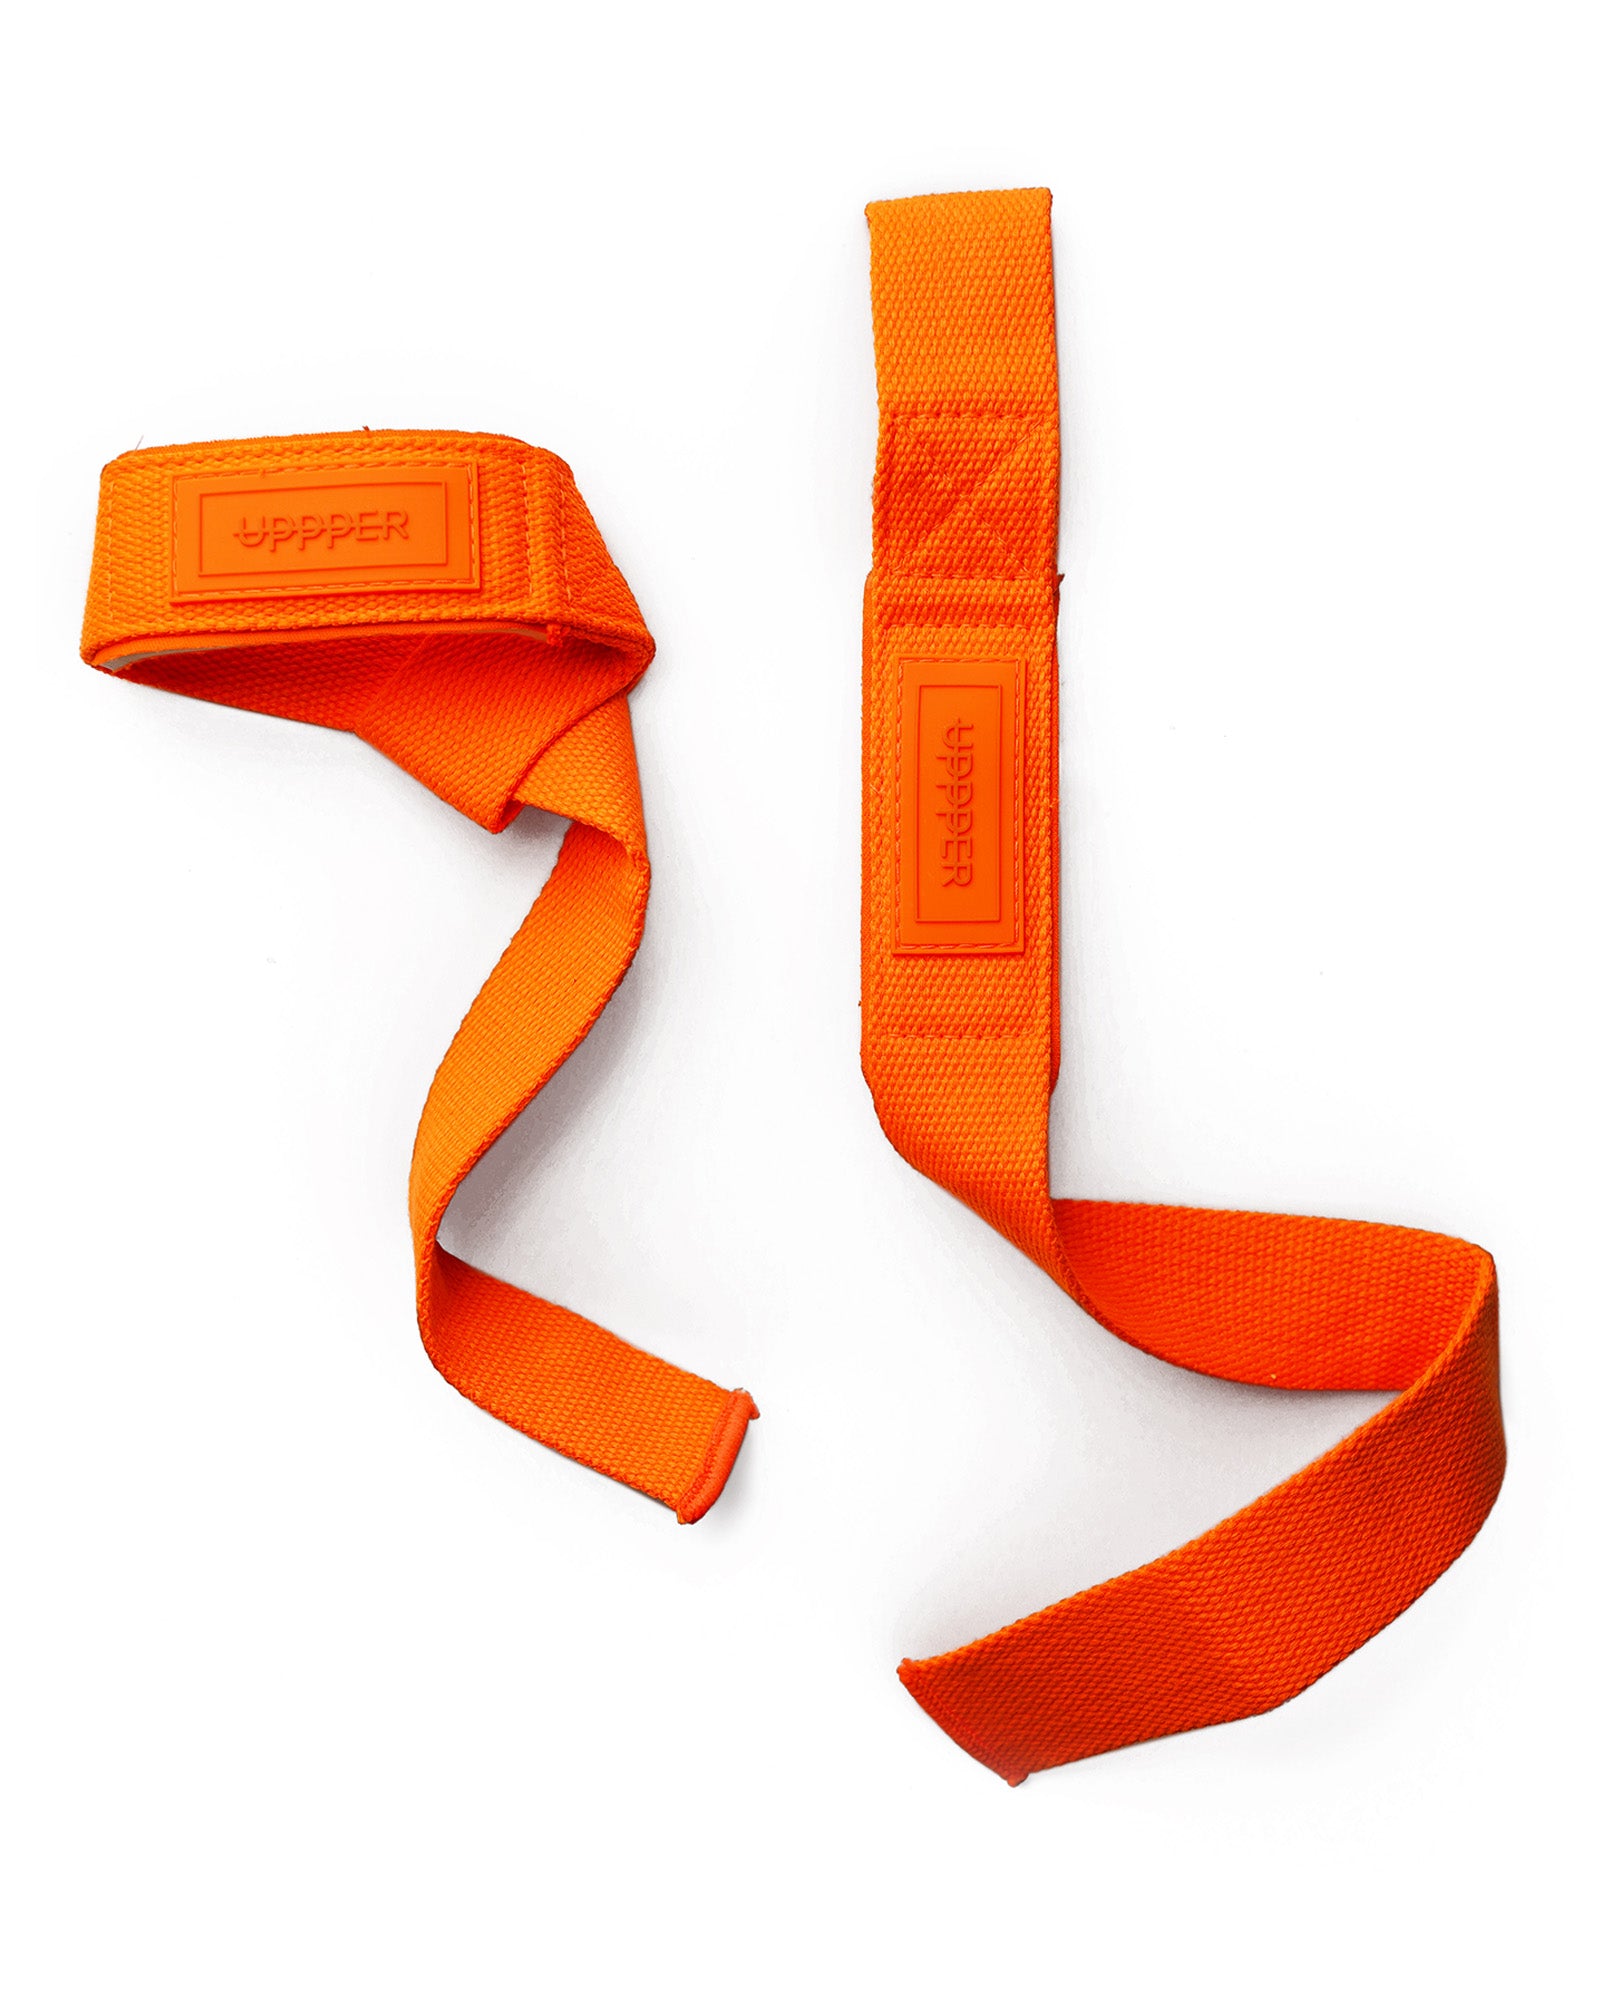 uppper lifting straps neon orange